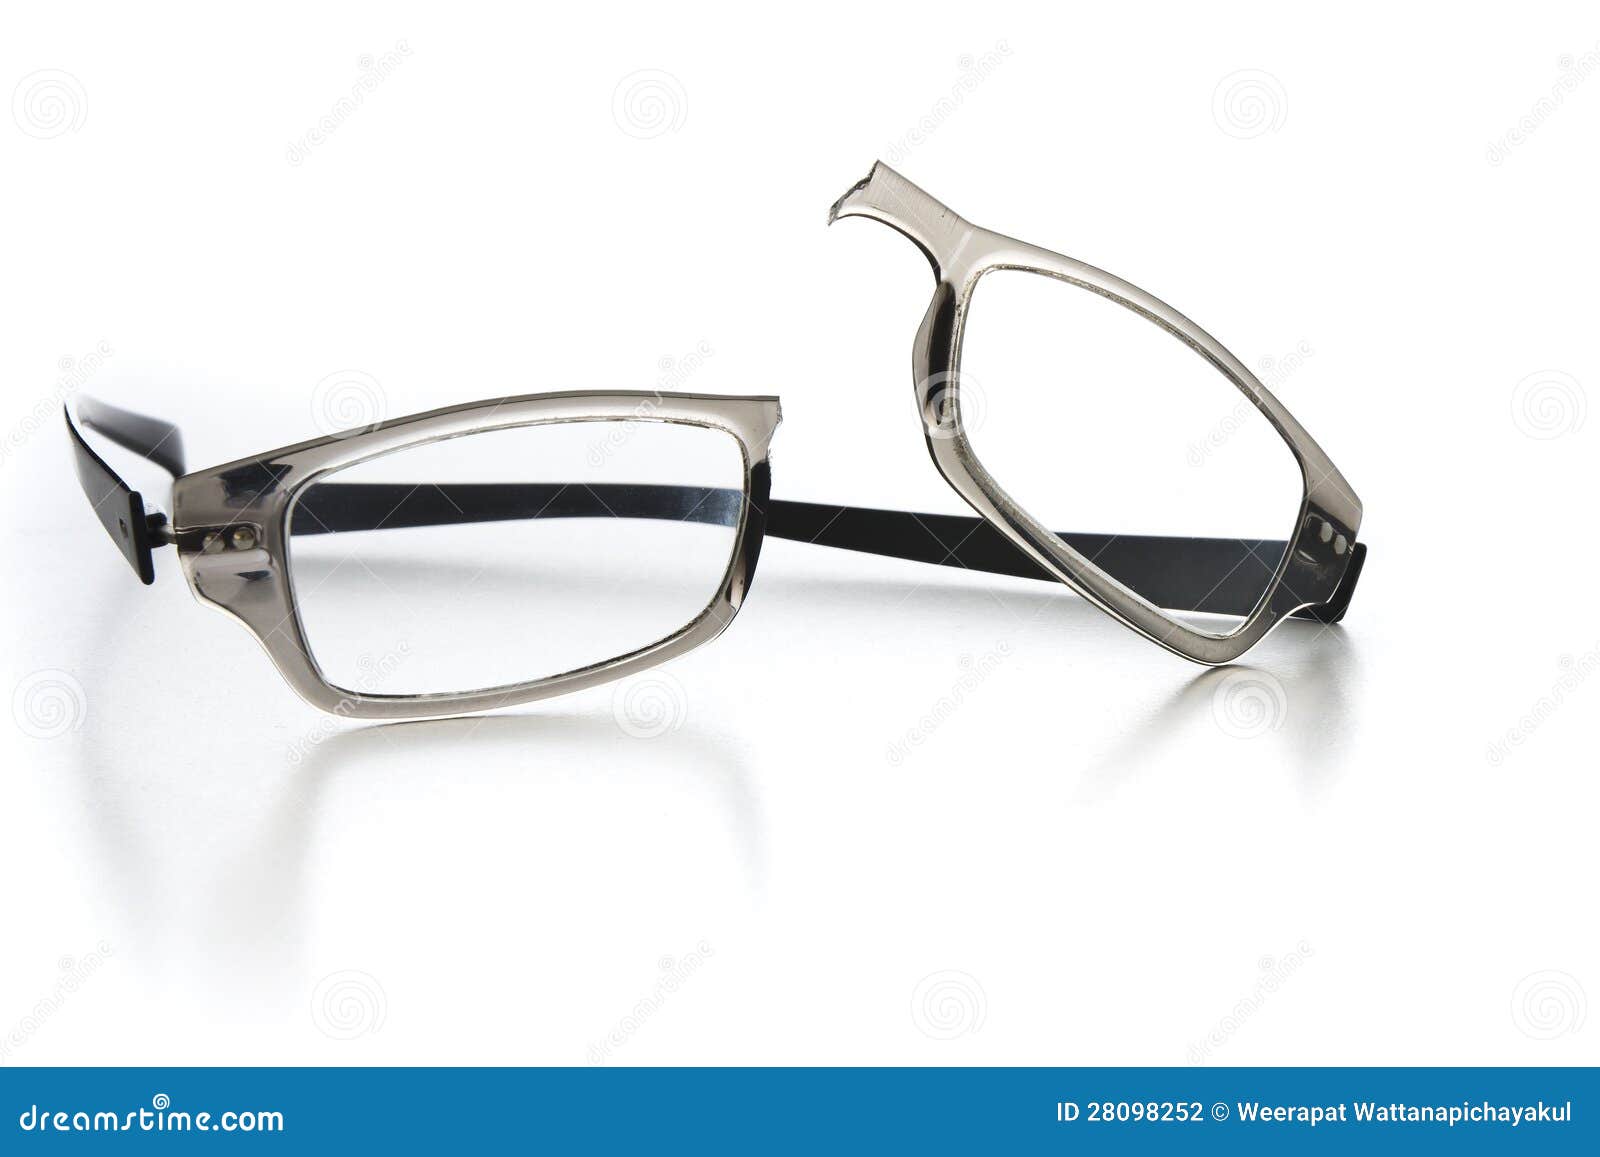 broken eyeglasses clipart - photo #15